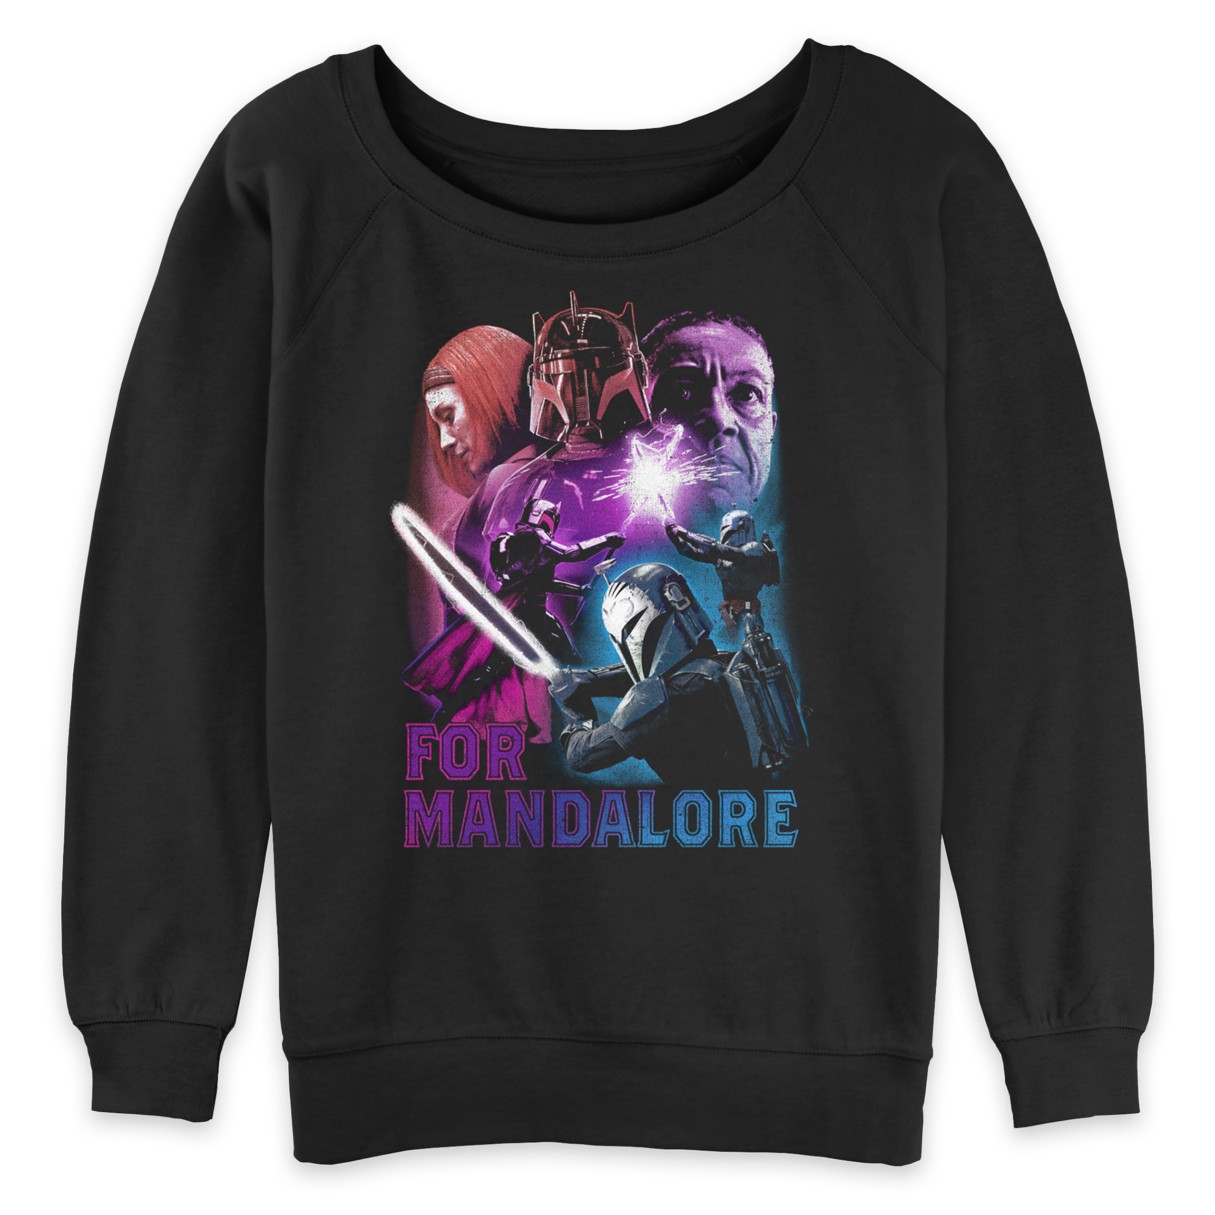 Star Wars:The Mandalorian ''For Mandalore'' Pullover Sweatshirt for Adults